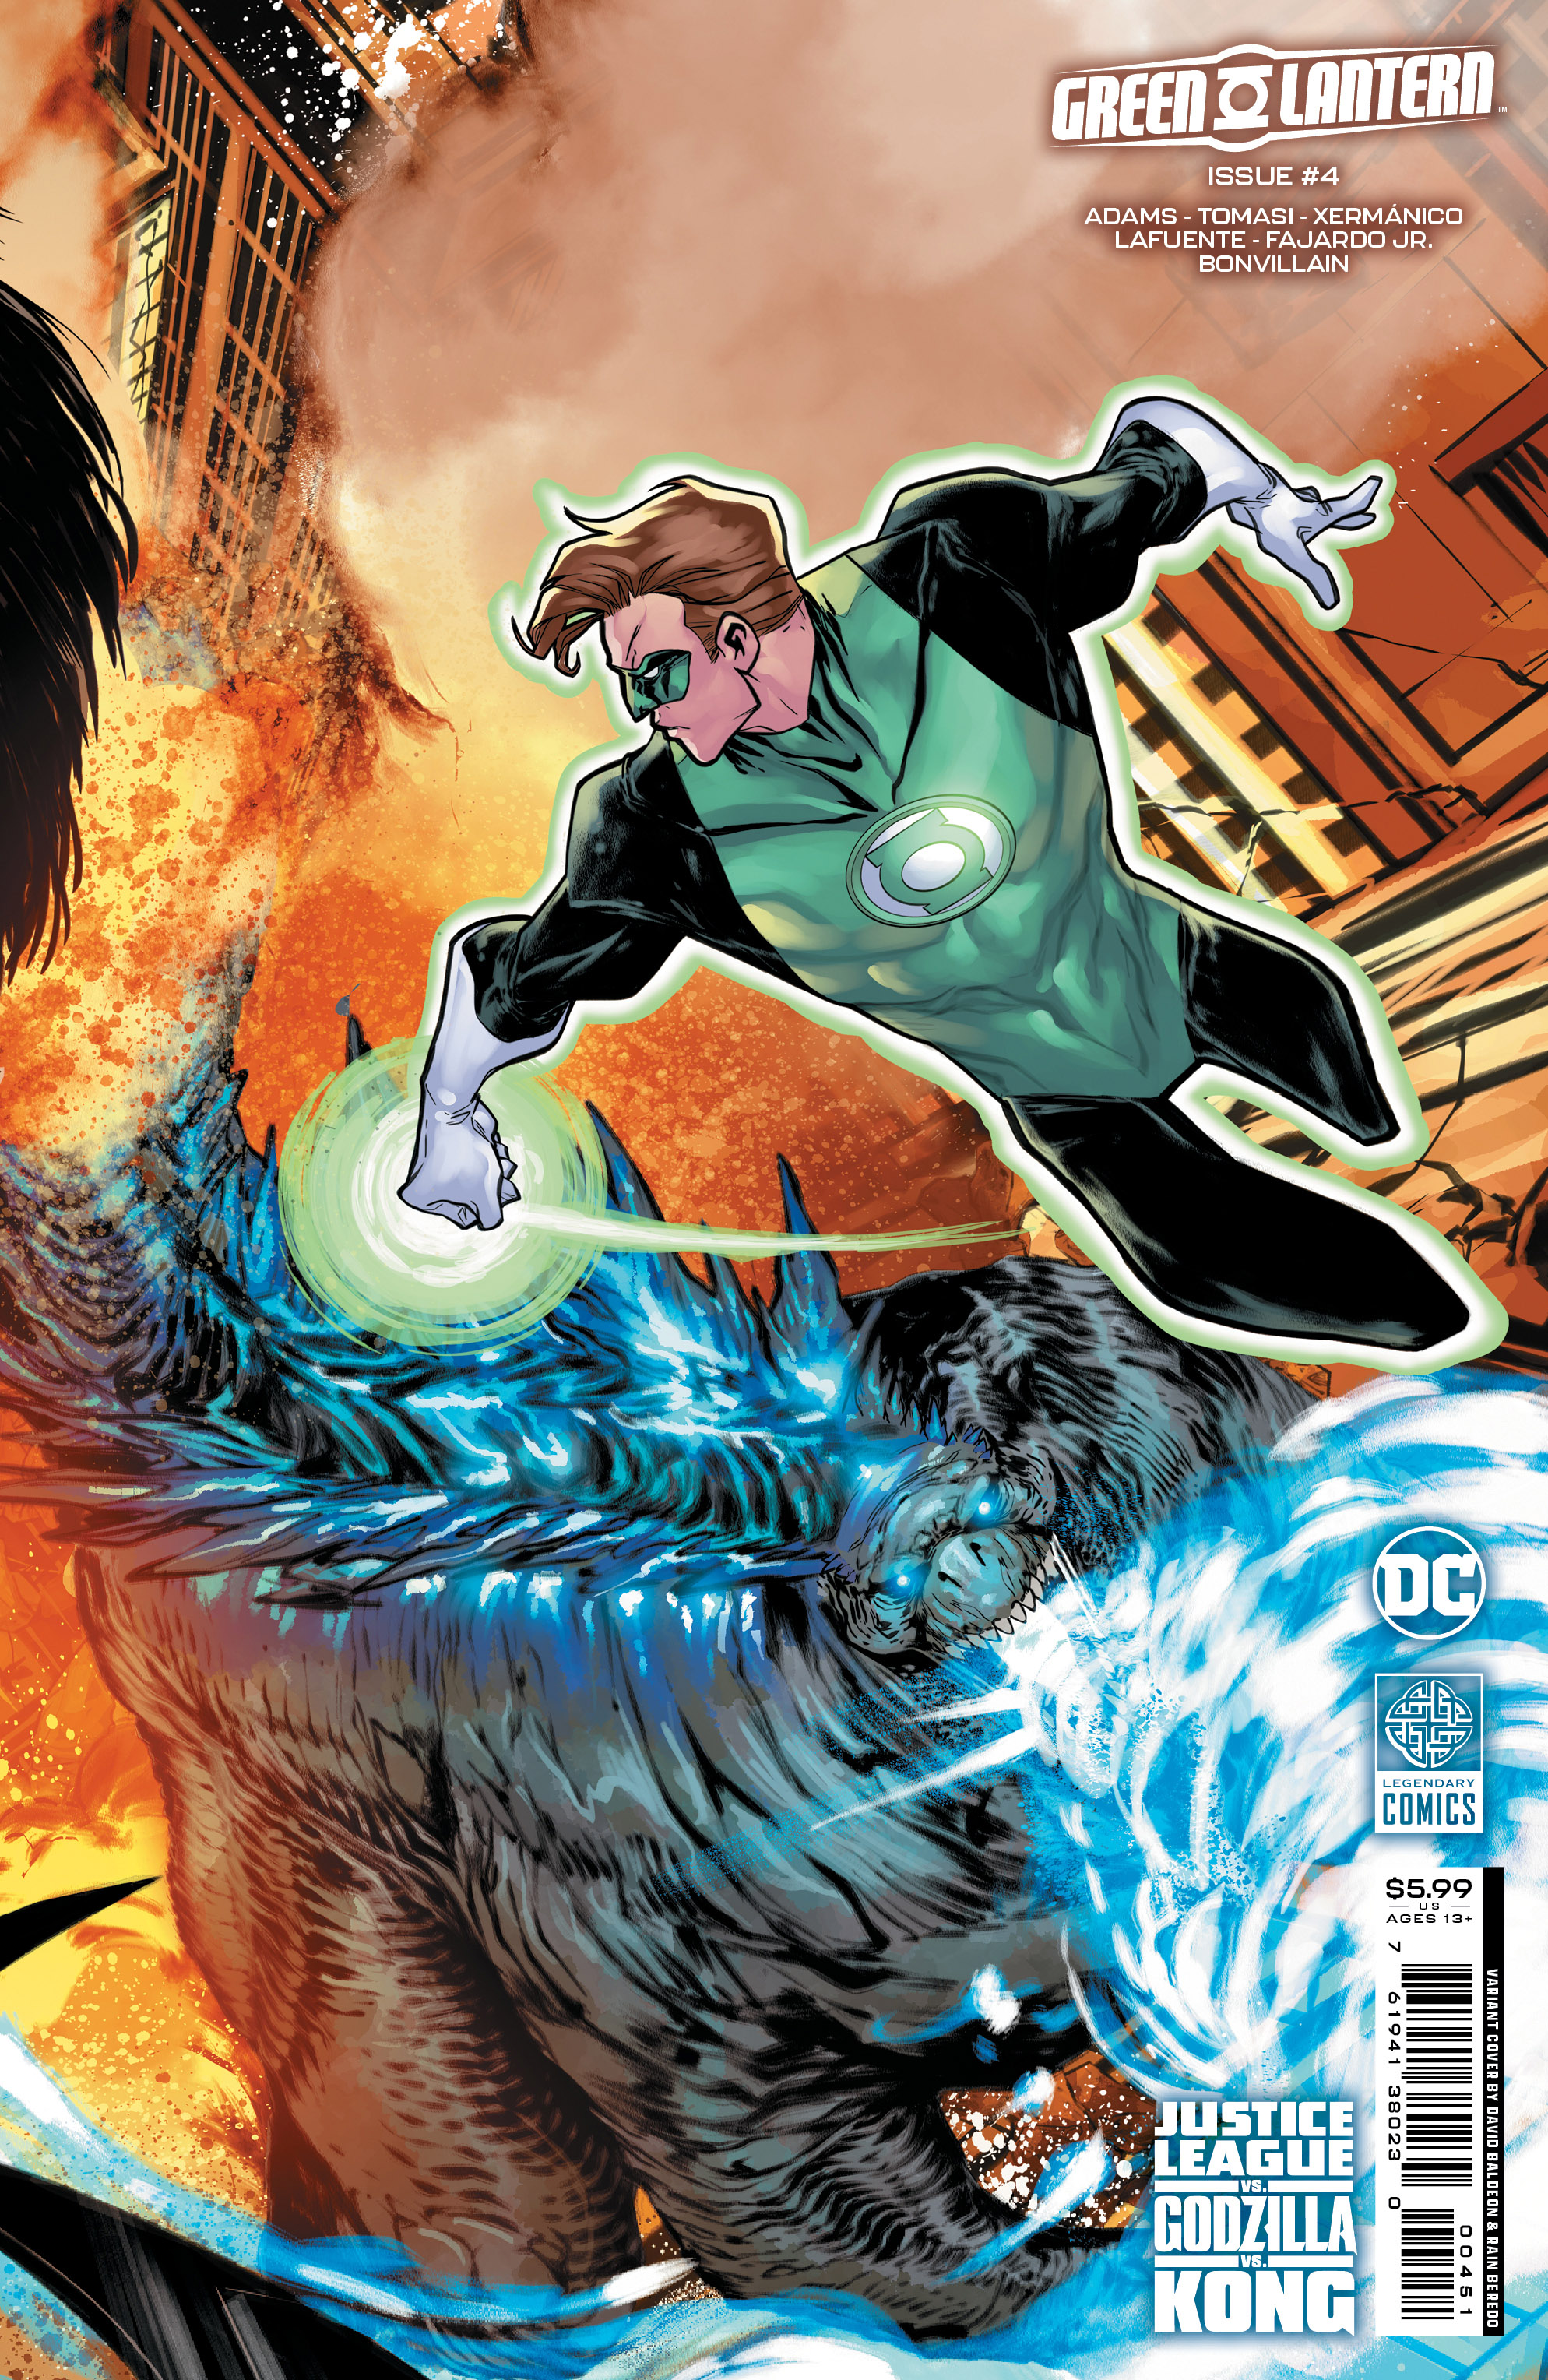 Green Lantern #4 Cover E Justice League Vs Godzilla Vs Kong Card Stock Variant